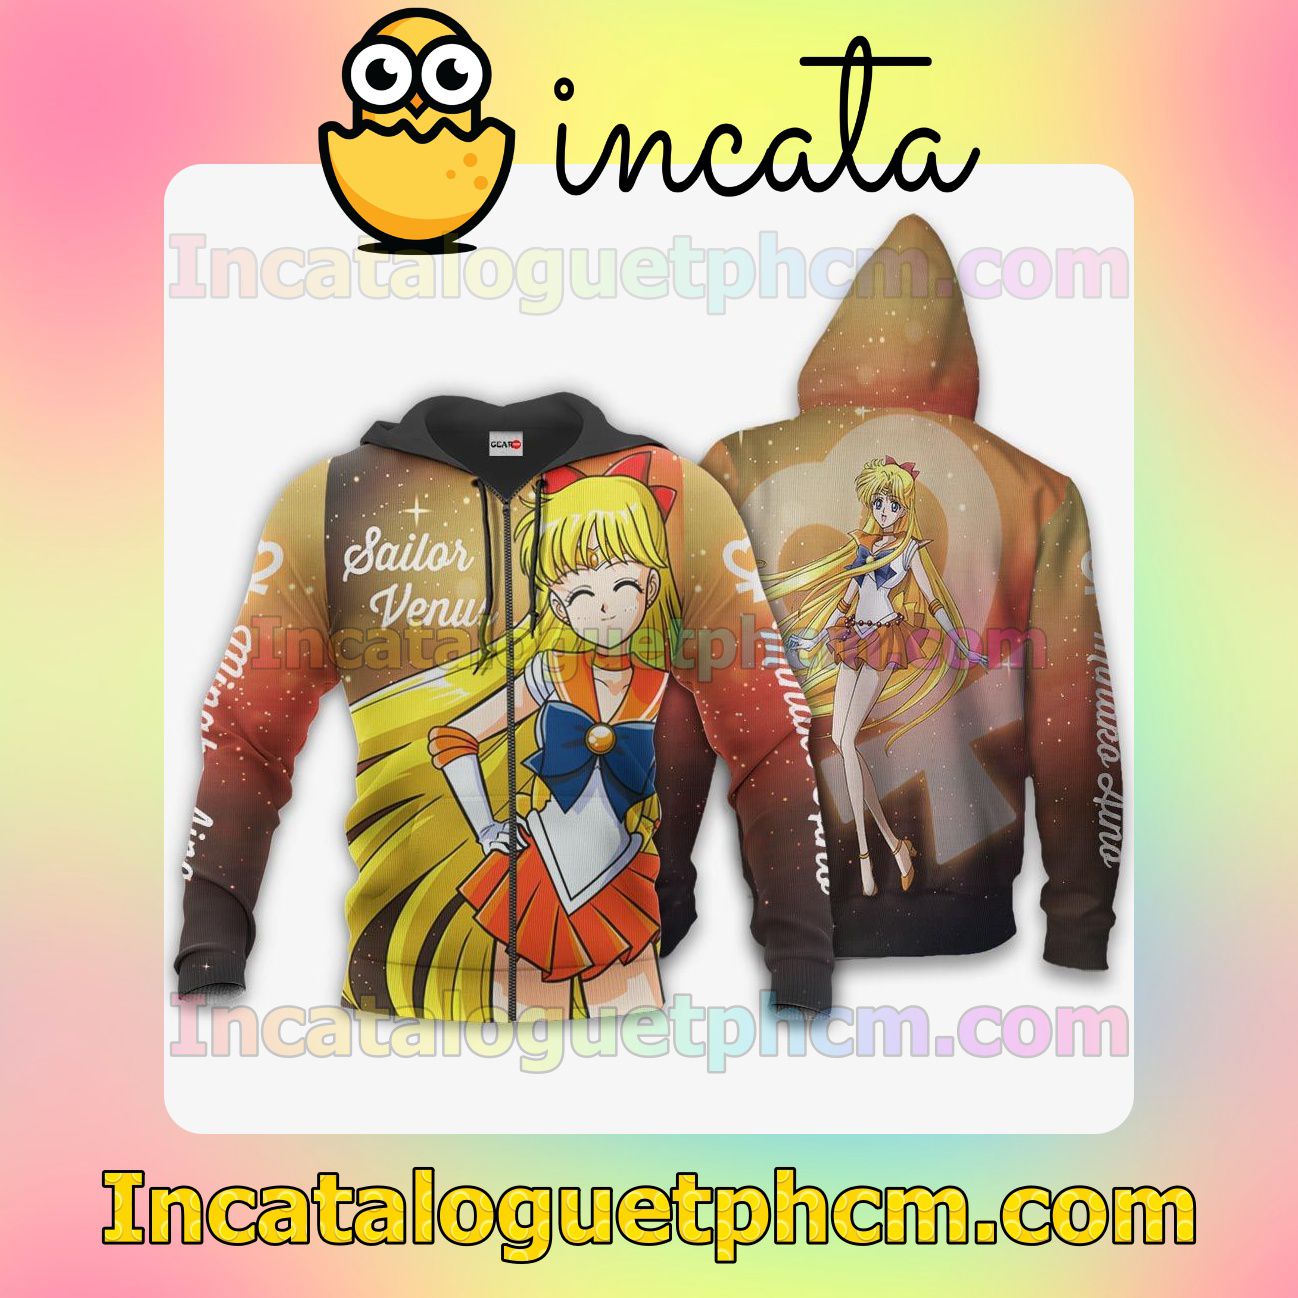 Sailor Venus Minako Aino Sailor Moon Anime Clothing Merch Zip Hoodie Jacket Shirts